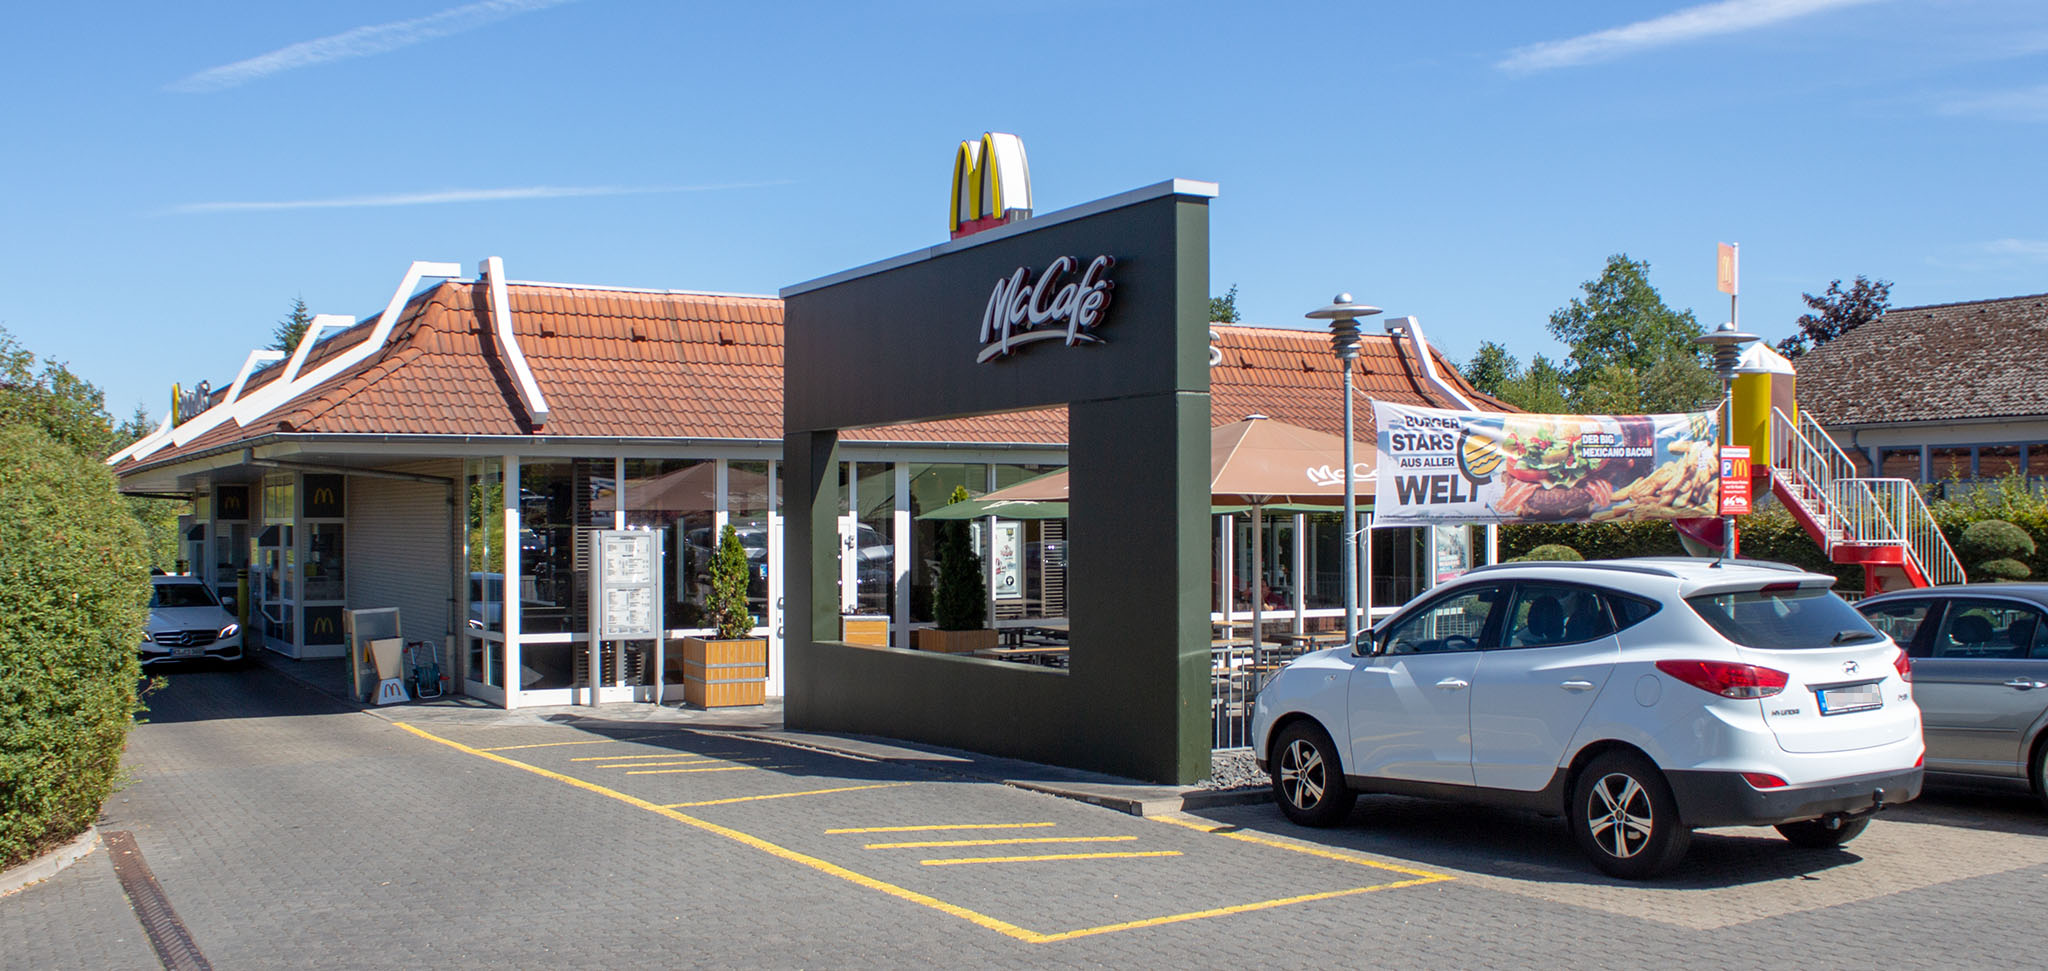 Das McDonald’s-Restaurant in Vellmar